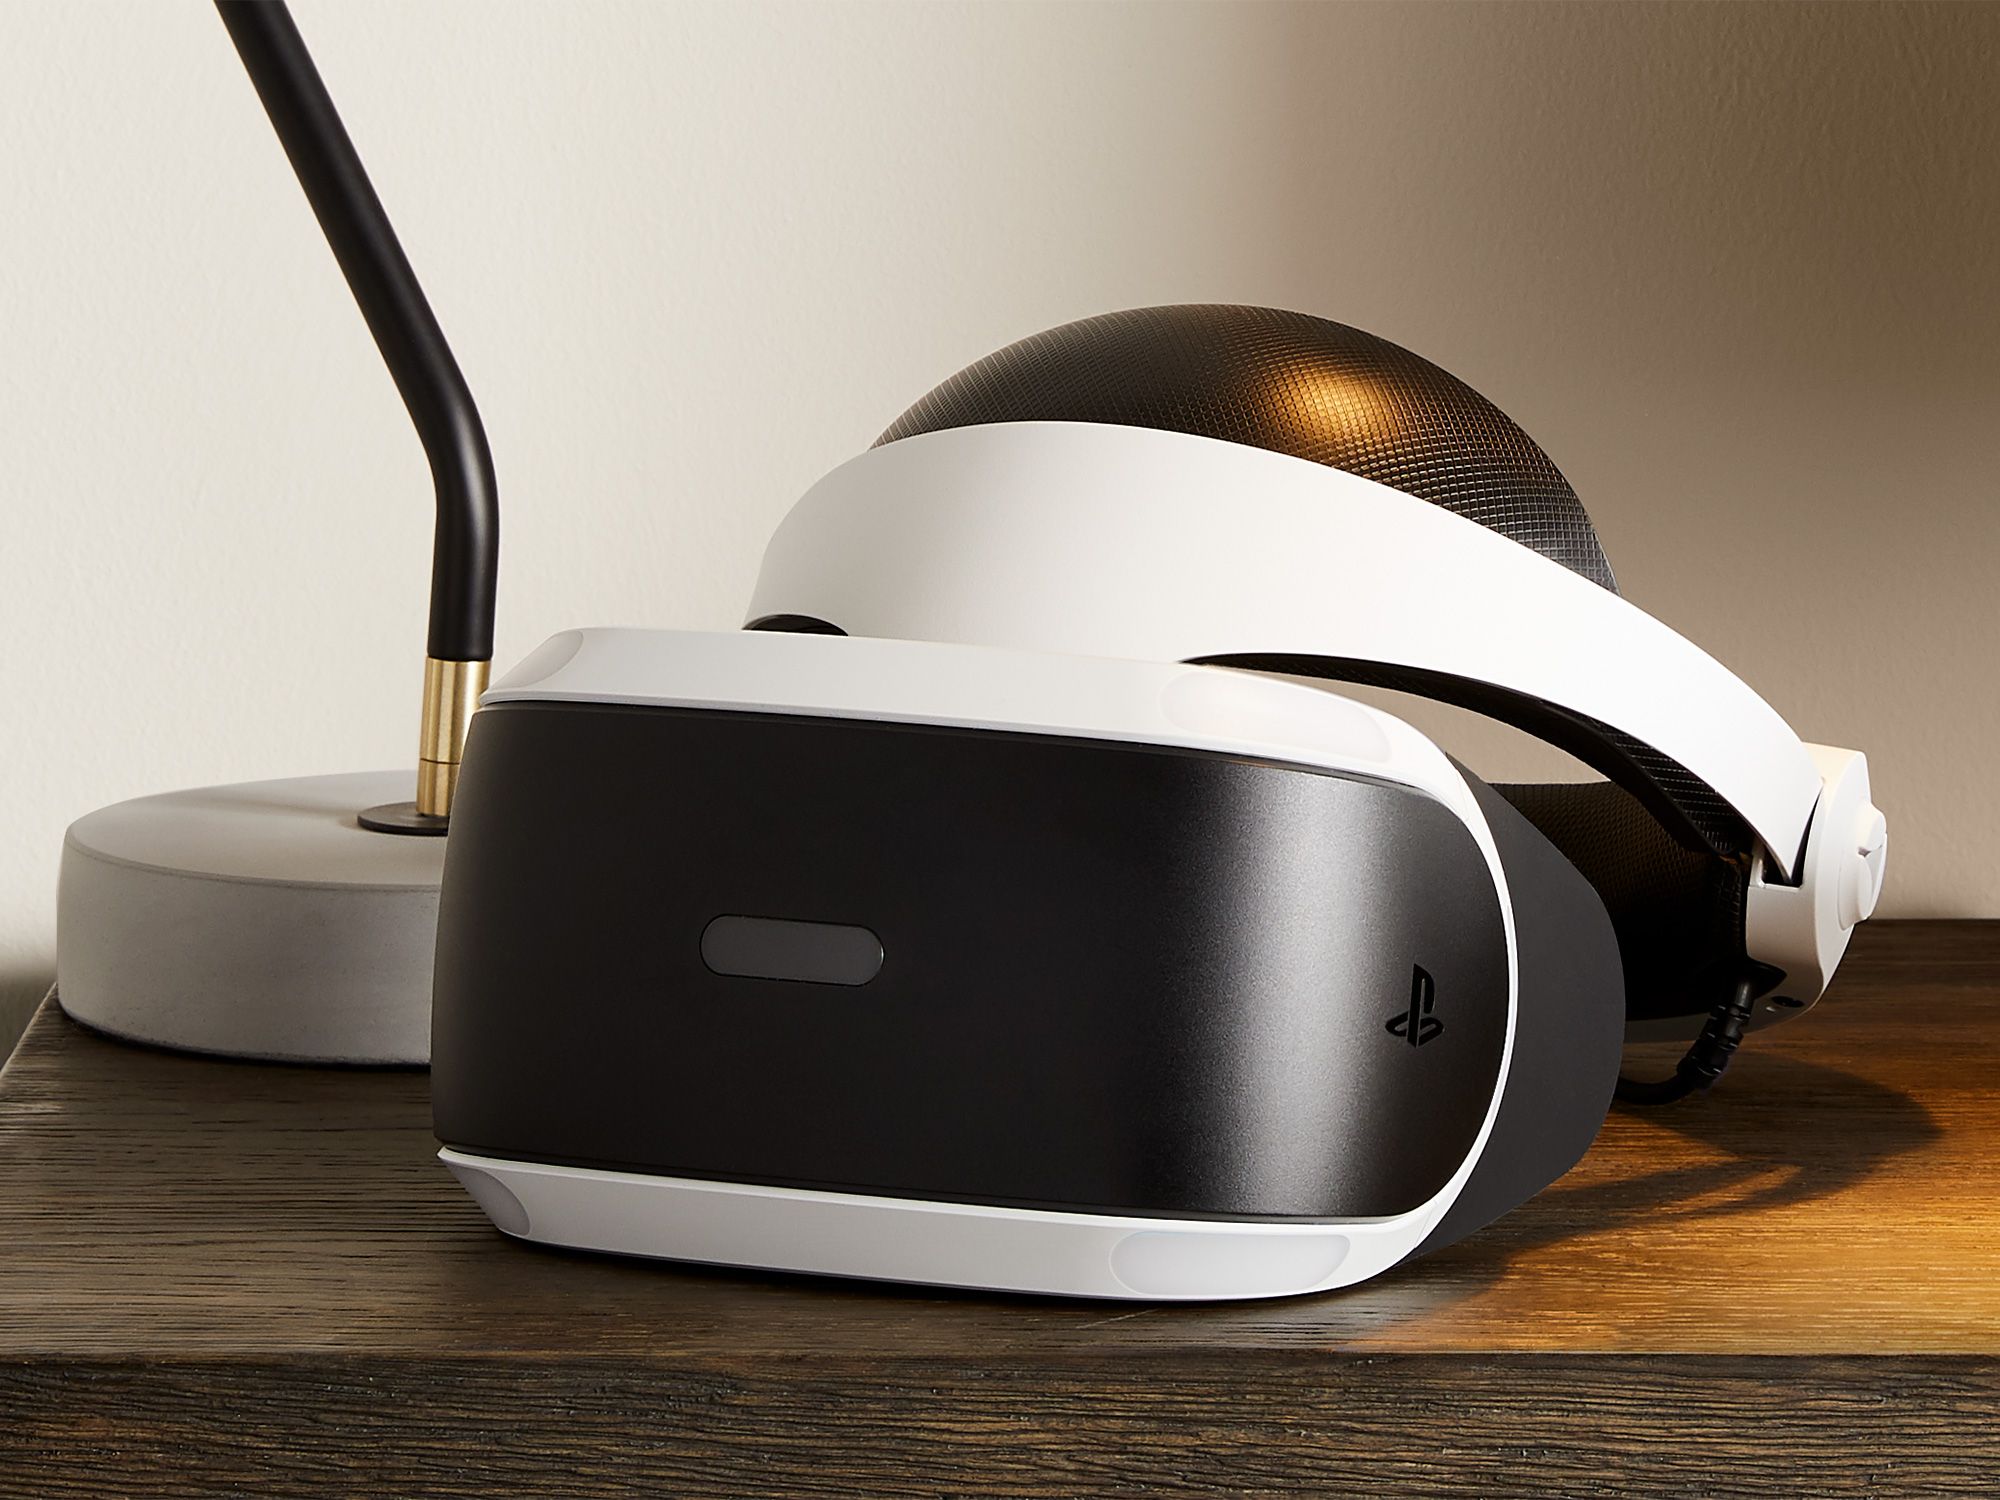 PlayStation virtual reality headset